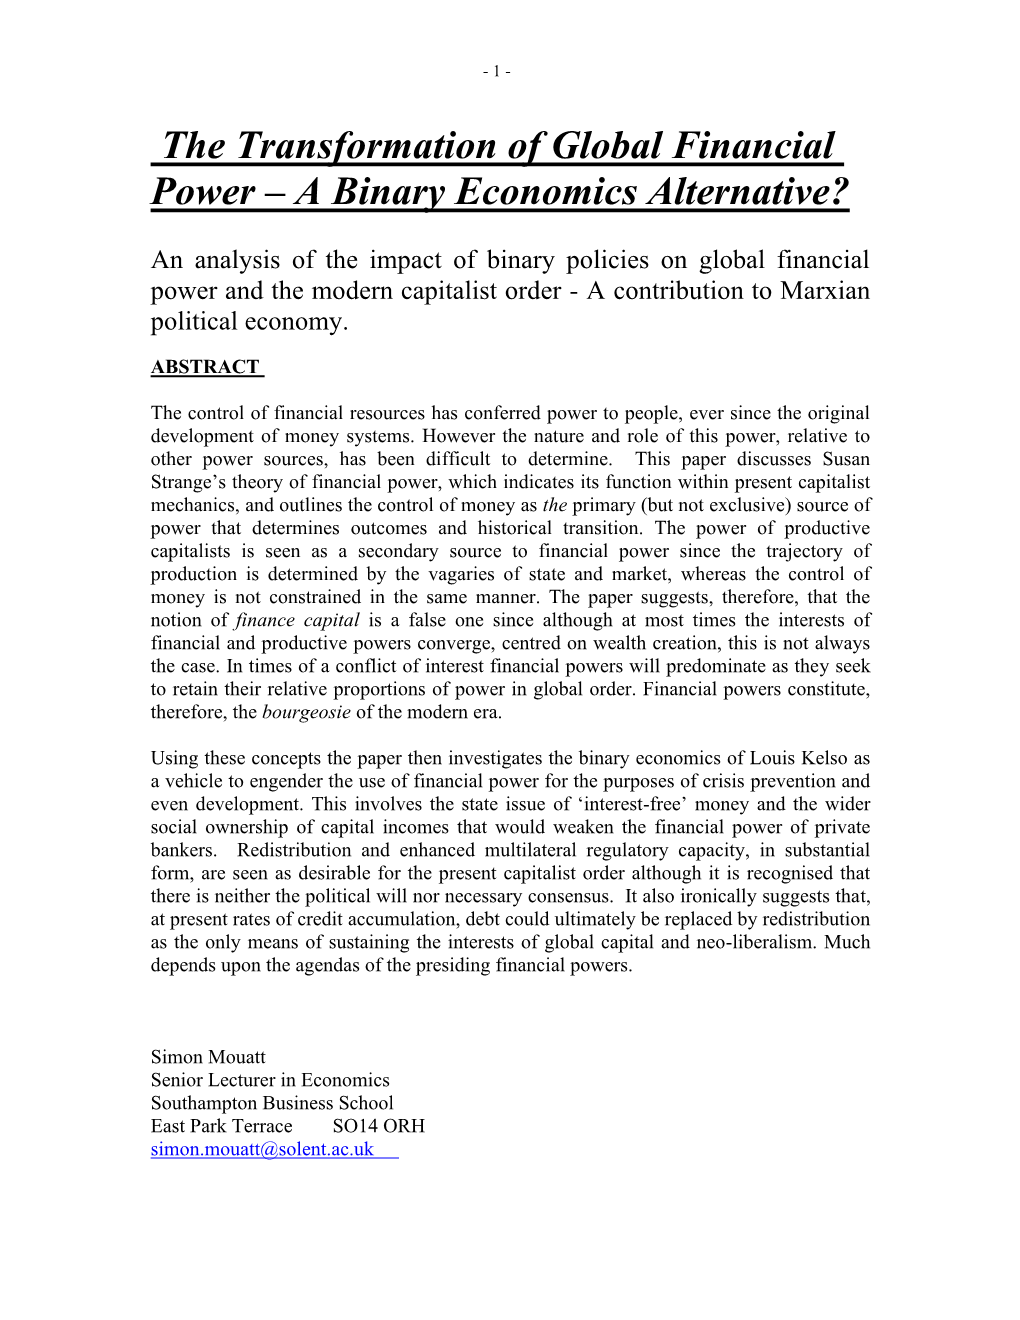 The Transformation of Global Financial Power – a Binary Economics Alternative?